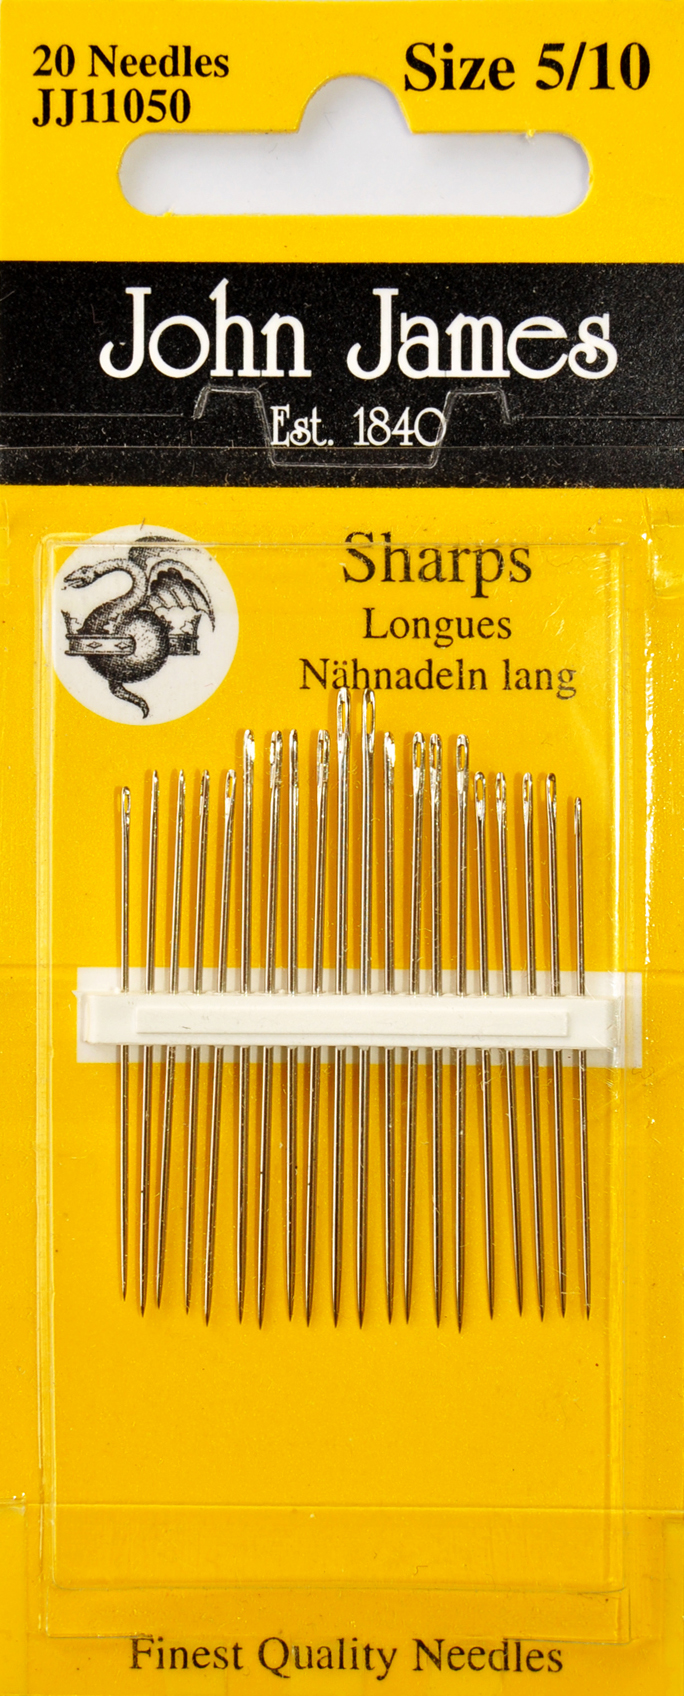 Sharps-Needles